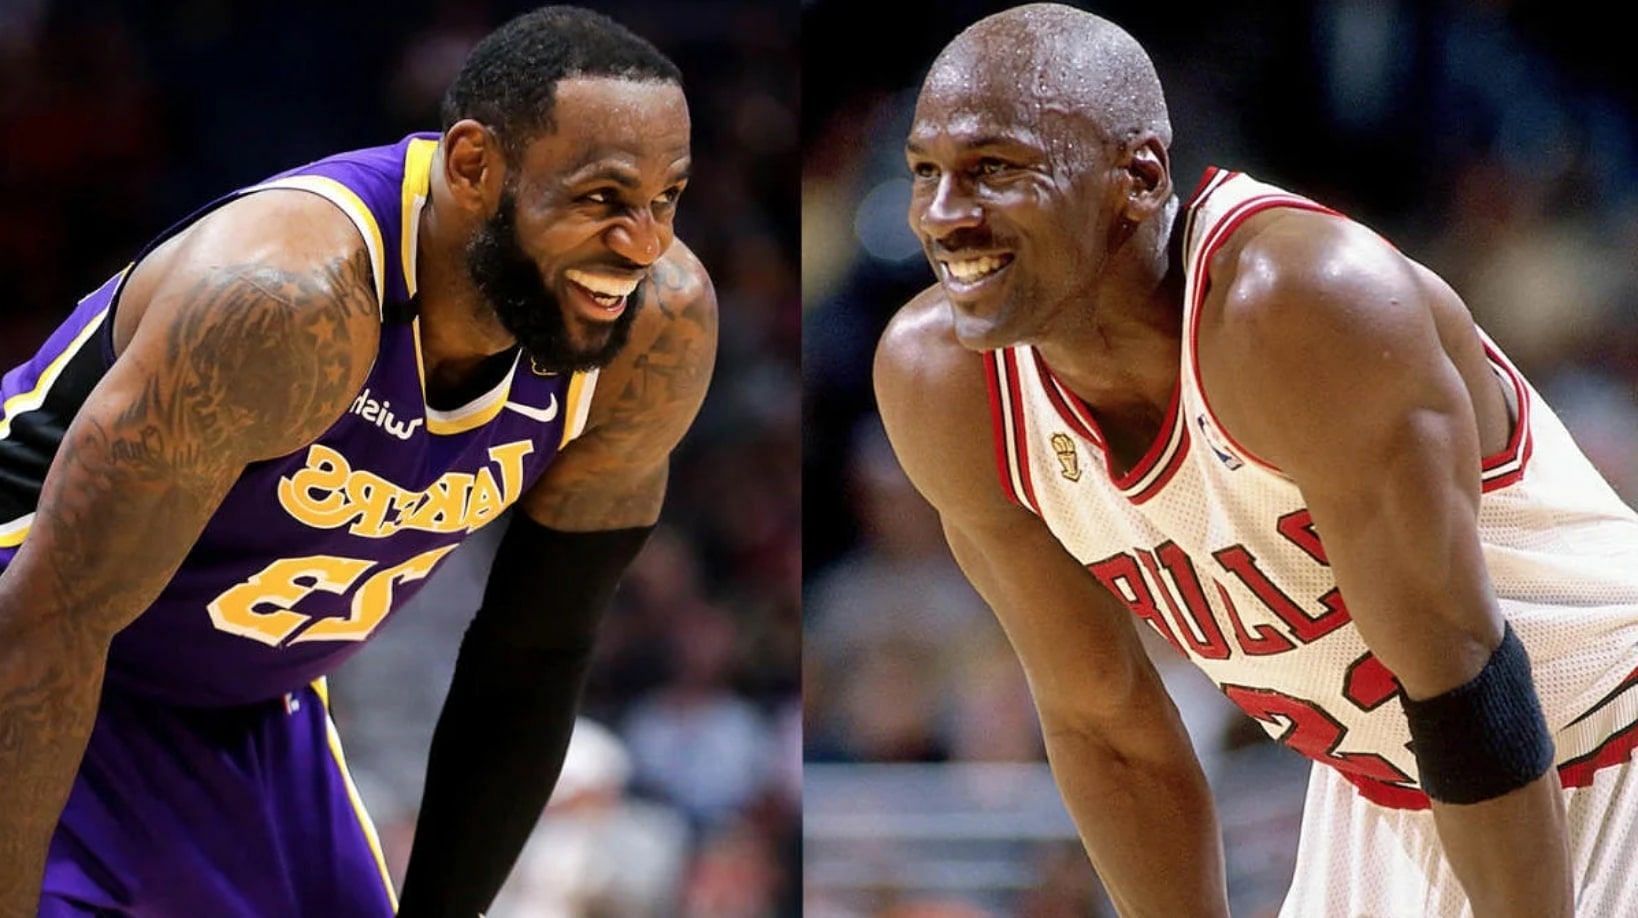 LA Lakers star forward LeBron James and Chicago Bulls legend Michael Jordan